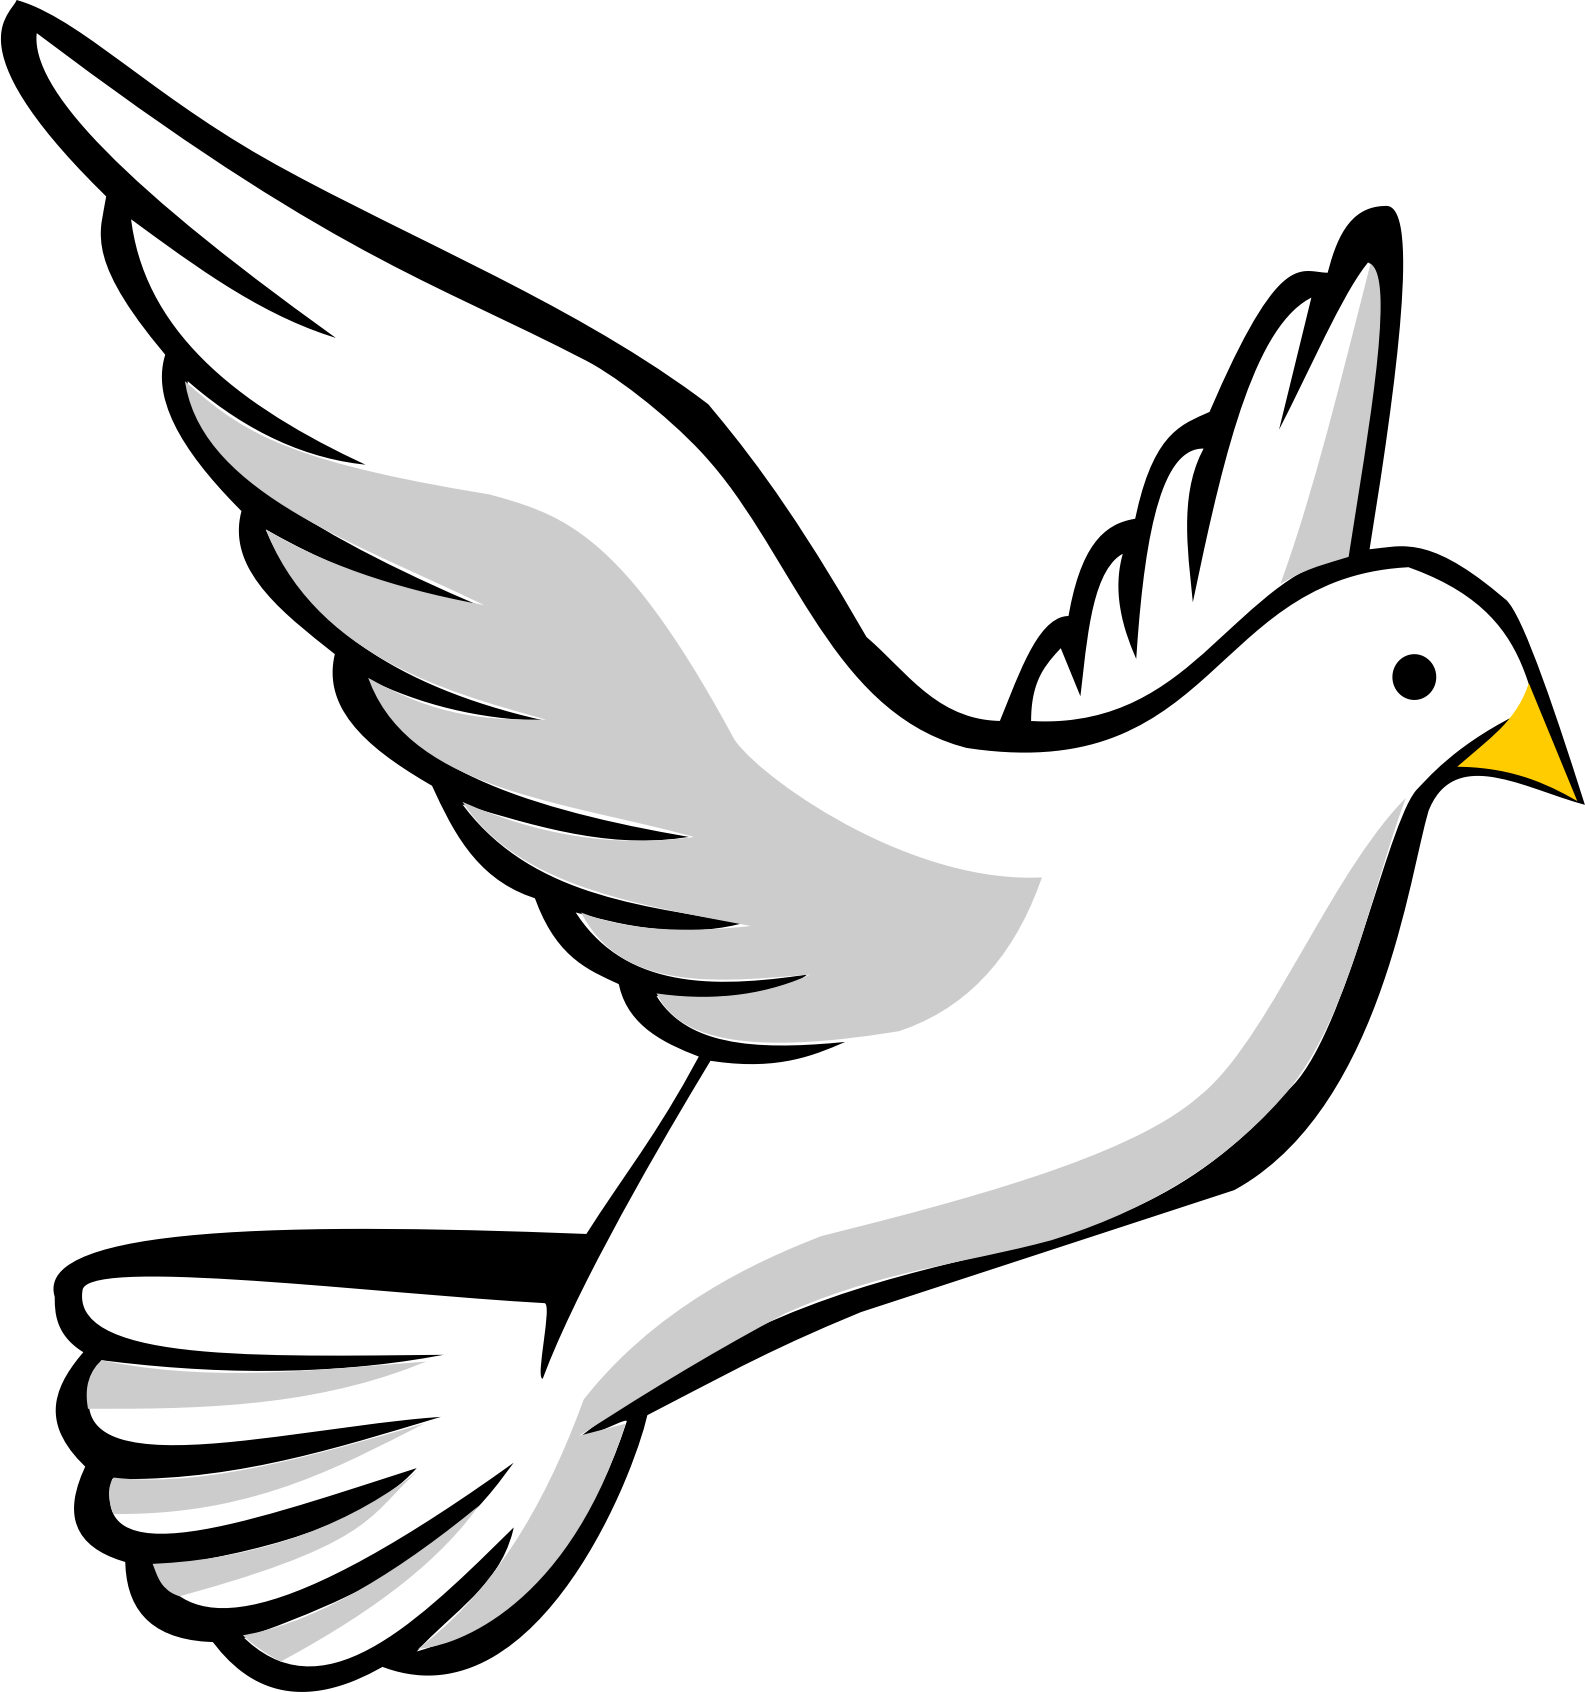 flying dove SVG Clip arts